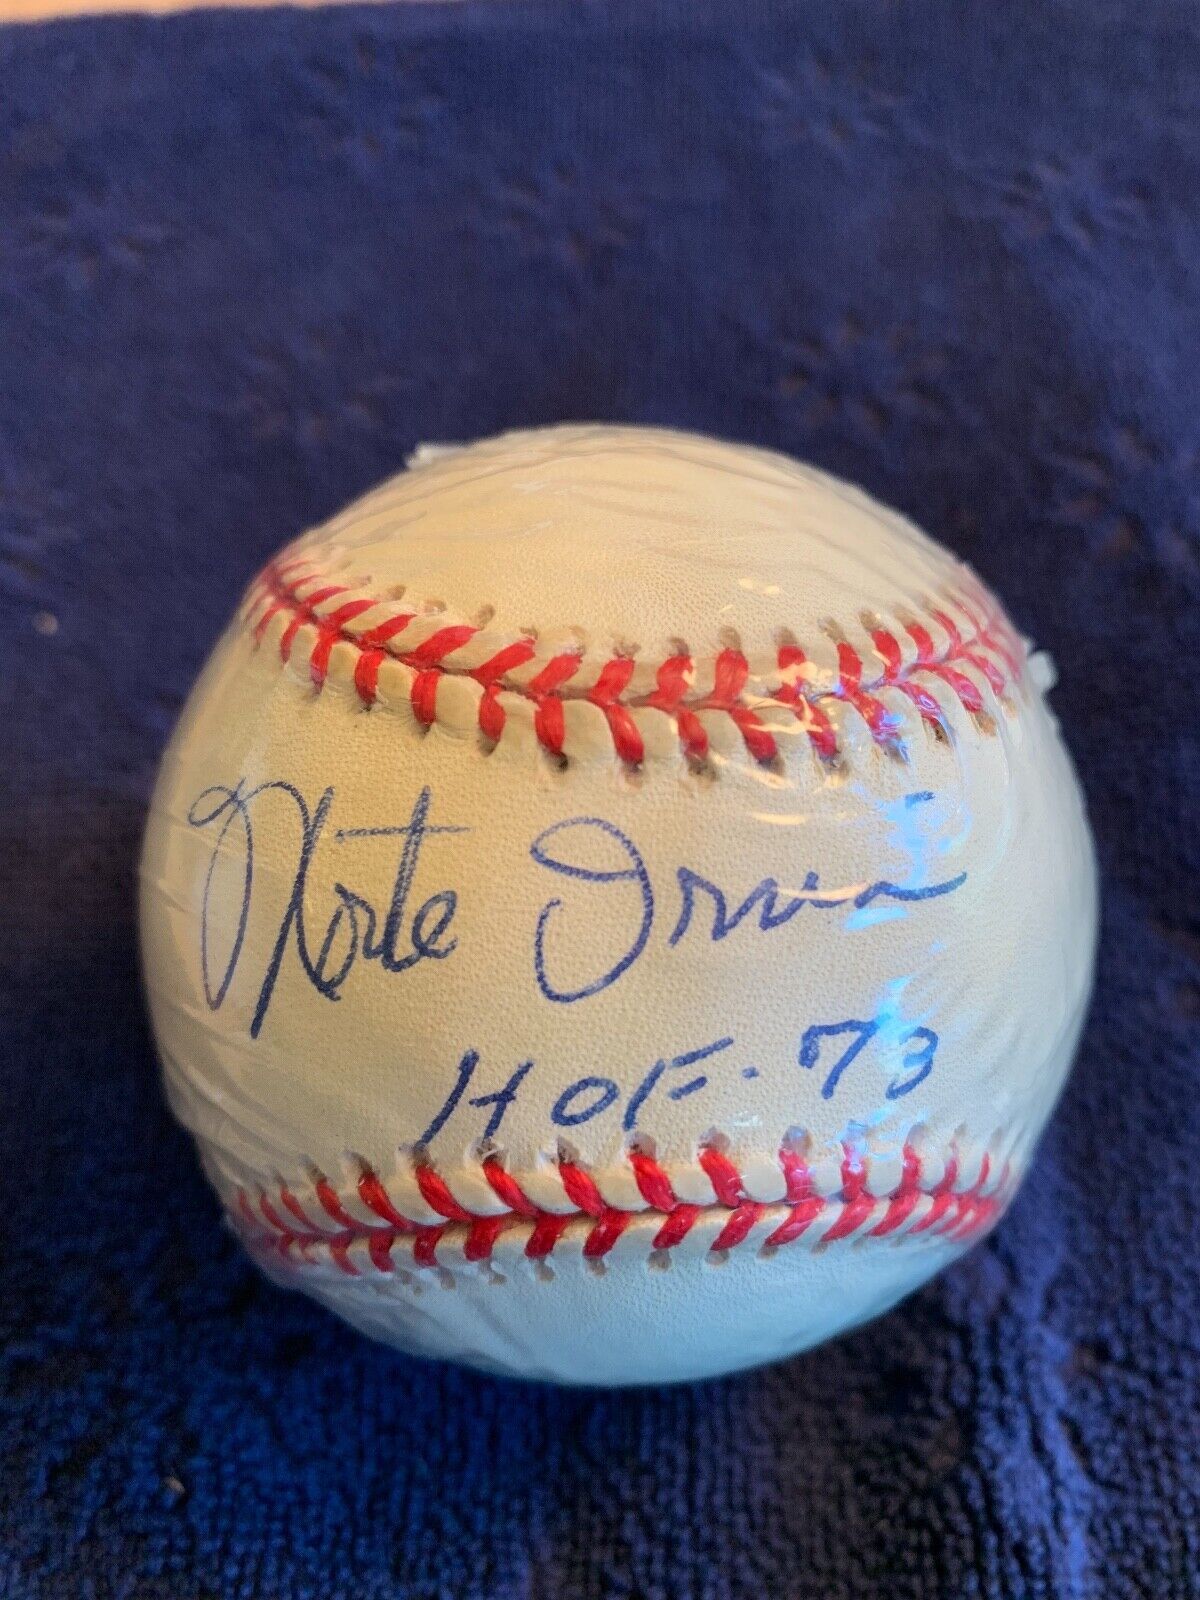 Monte Irvin HOF 73 Autographed ONL Leonard S Coleman Baseball w/COA & Photos